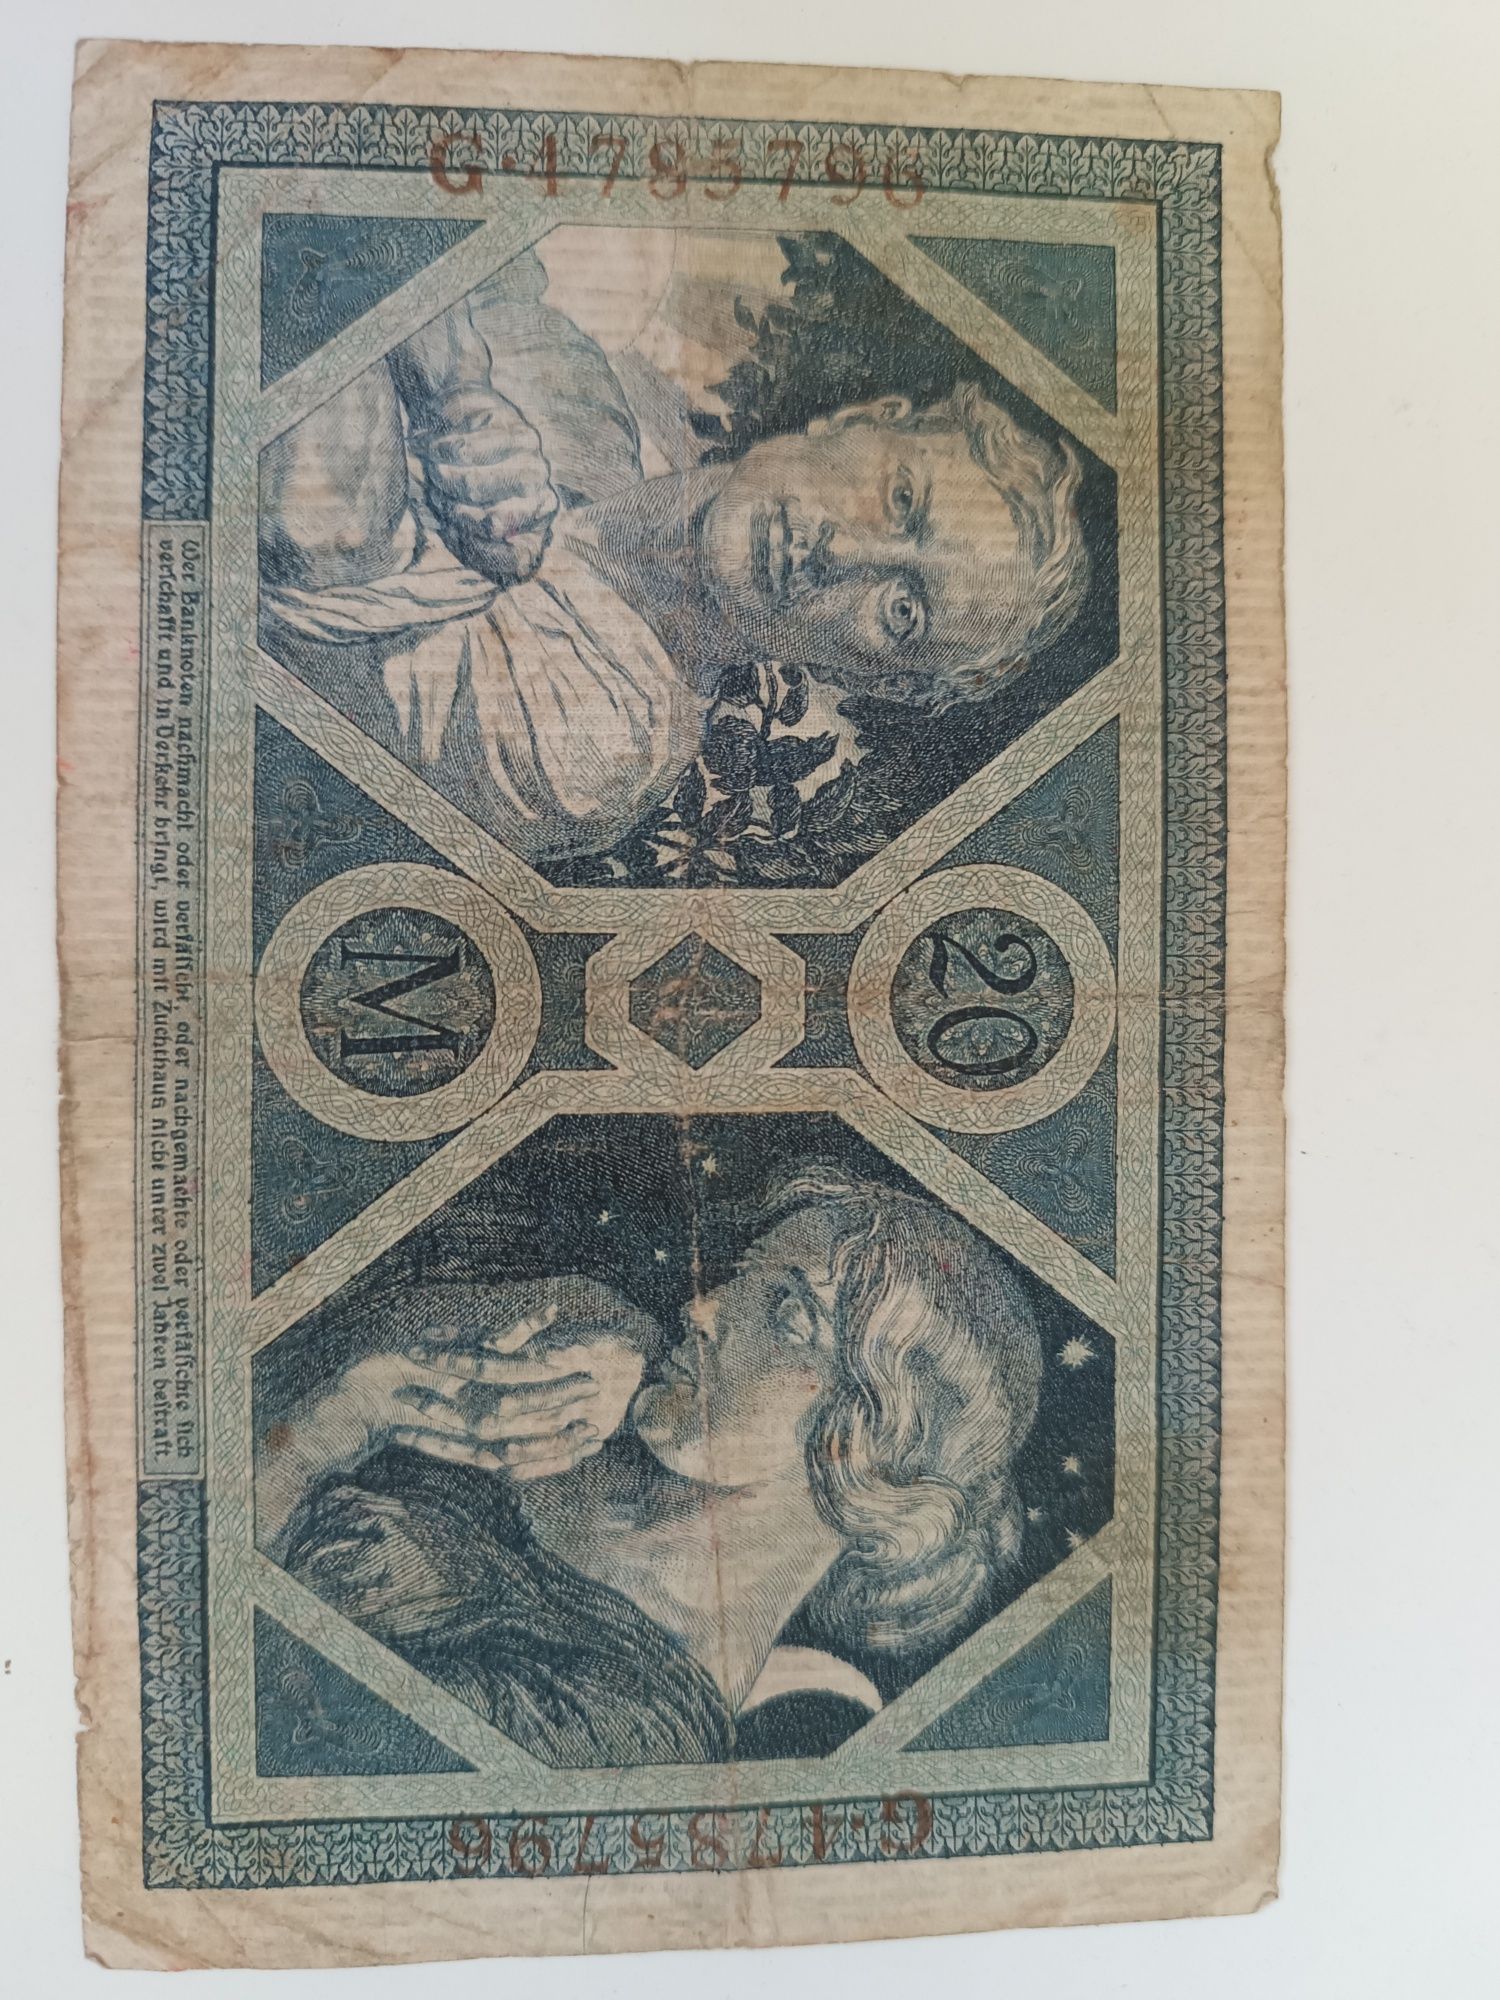 Banknot 20 marek z roku 1915